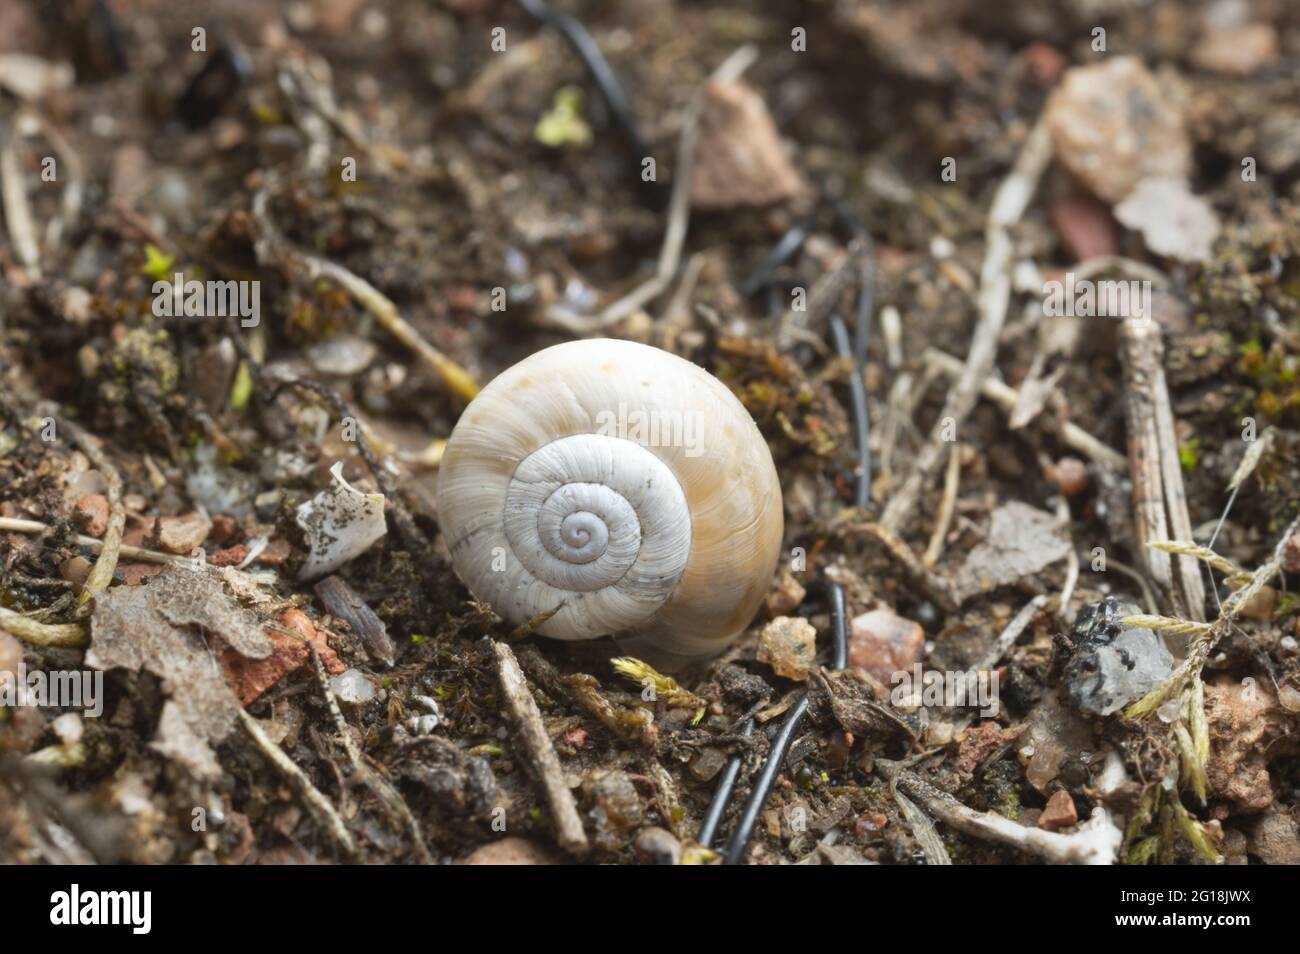 Closeup of an eastern heath snail, Xerolenta obvia snail in dry environment Stock Photo